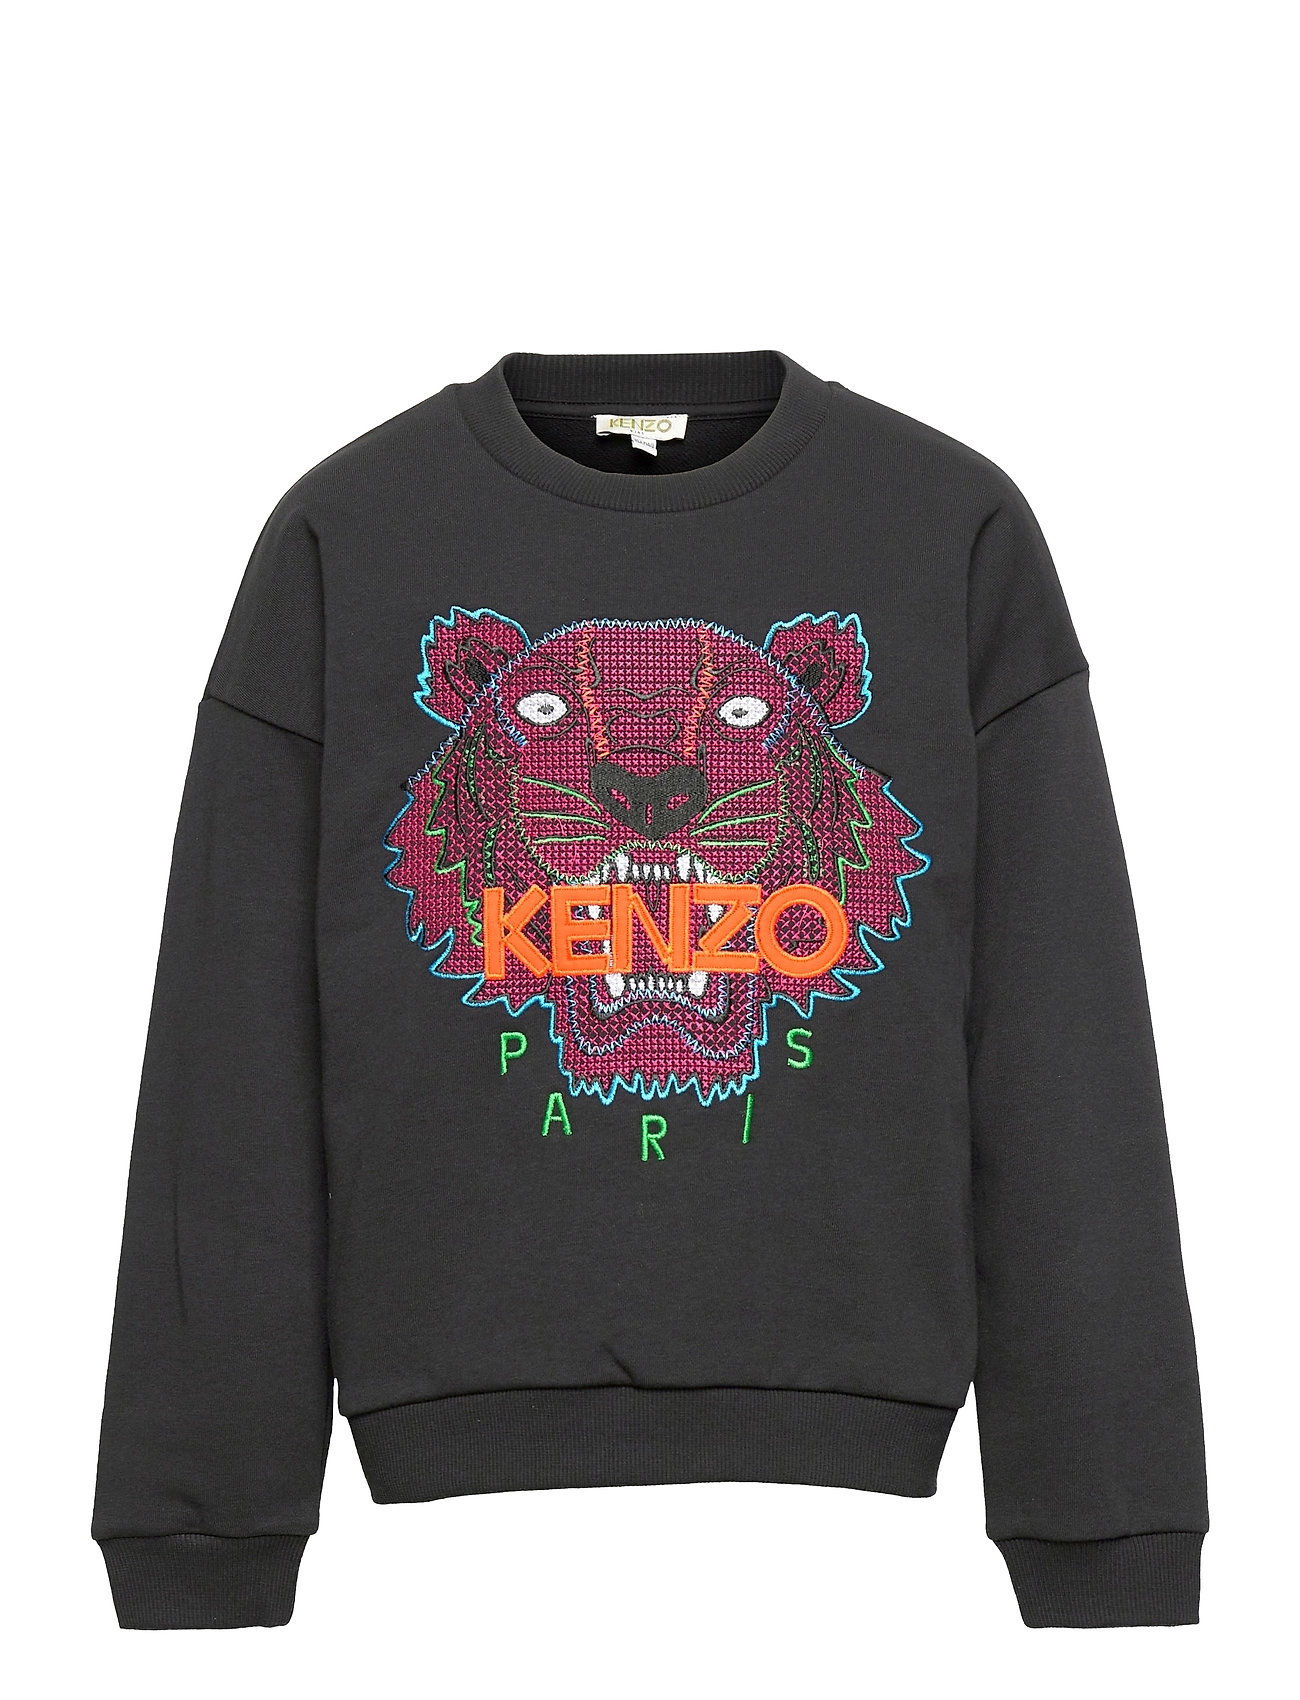 Myre Overskyet Repræsentere Kenzo sweatshirts – Sweatshirt Sweatshirt Trøje Sort Kenzo til børn i Sort  - Pashion.dk